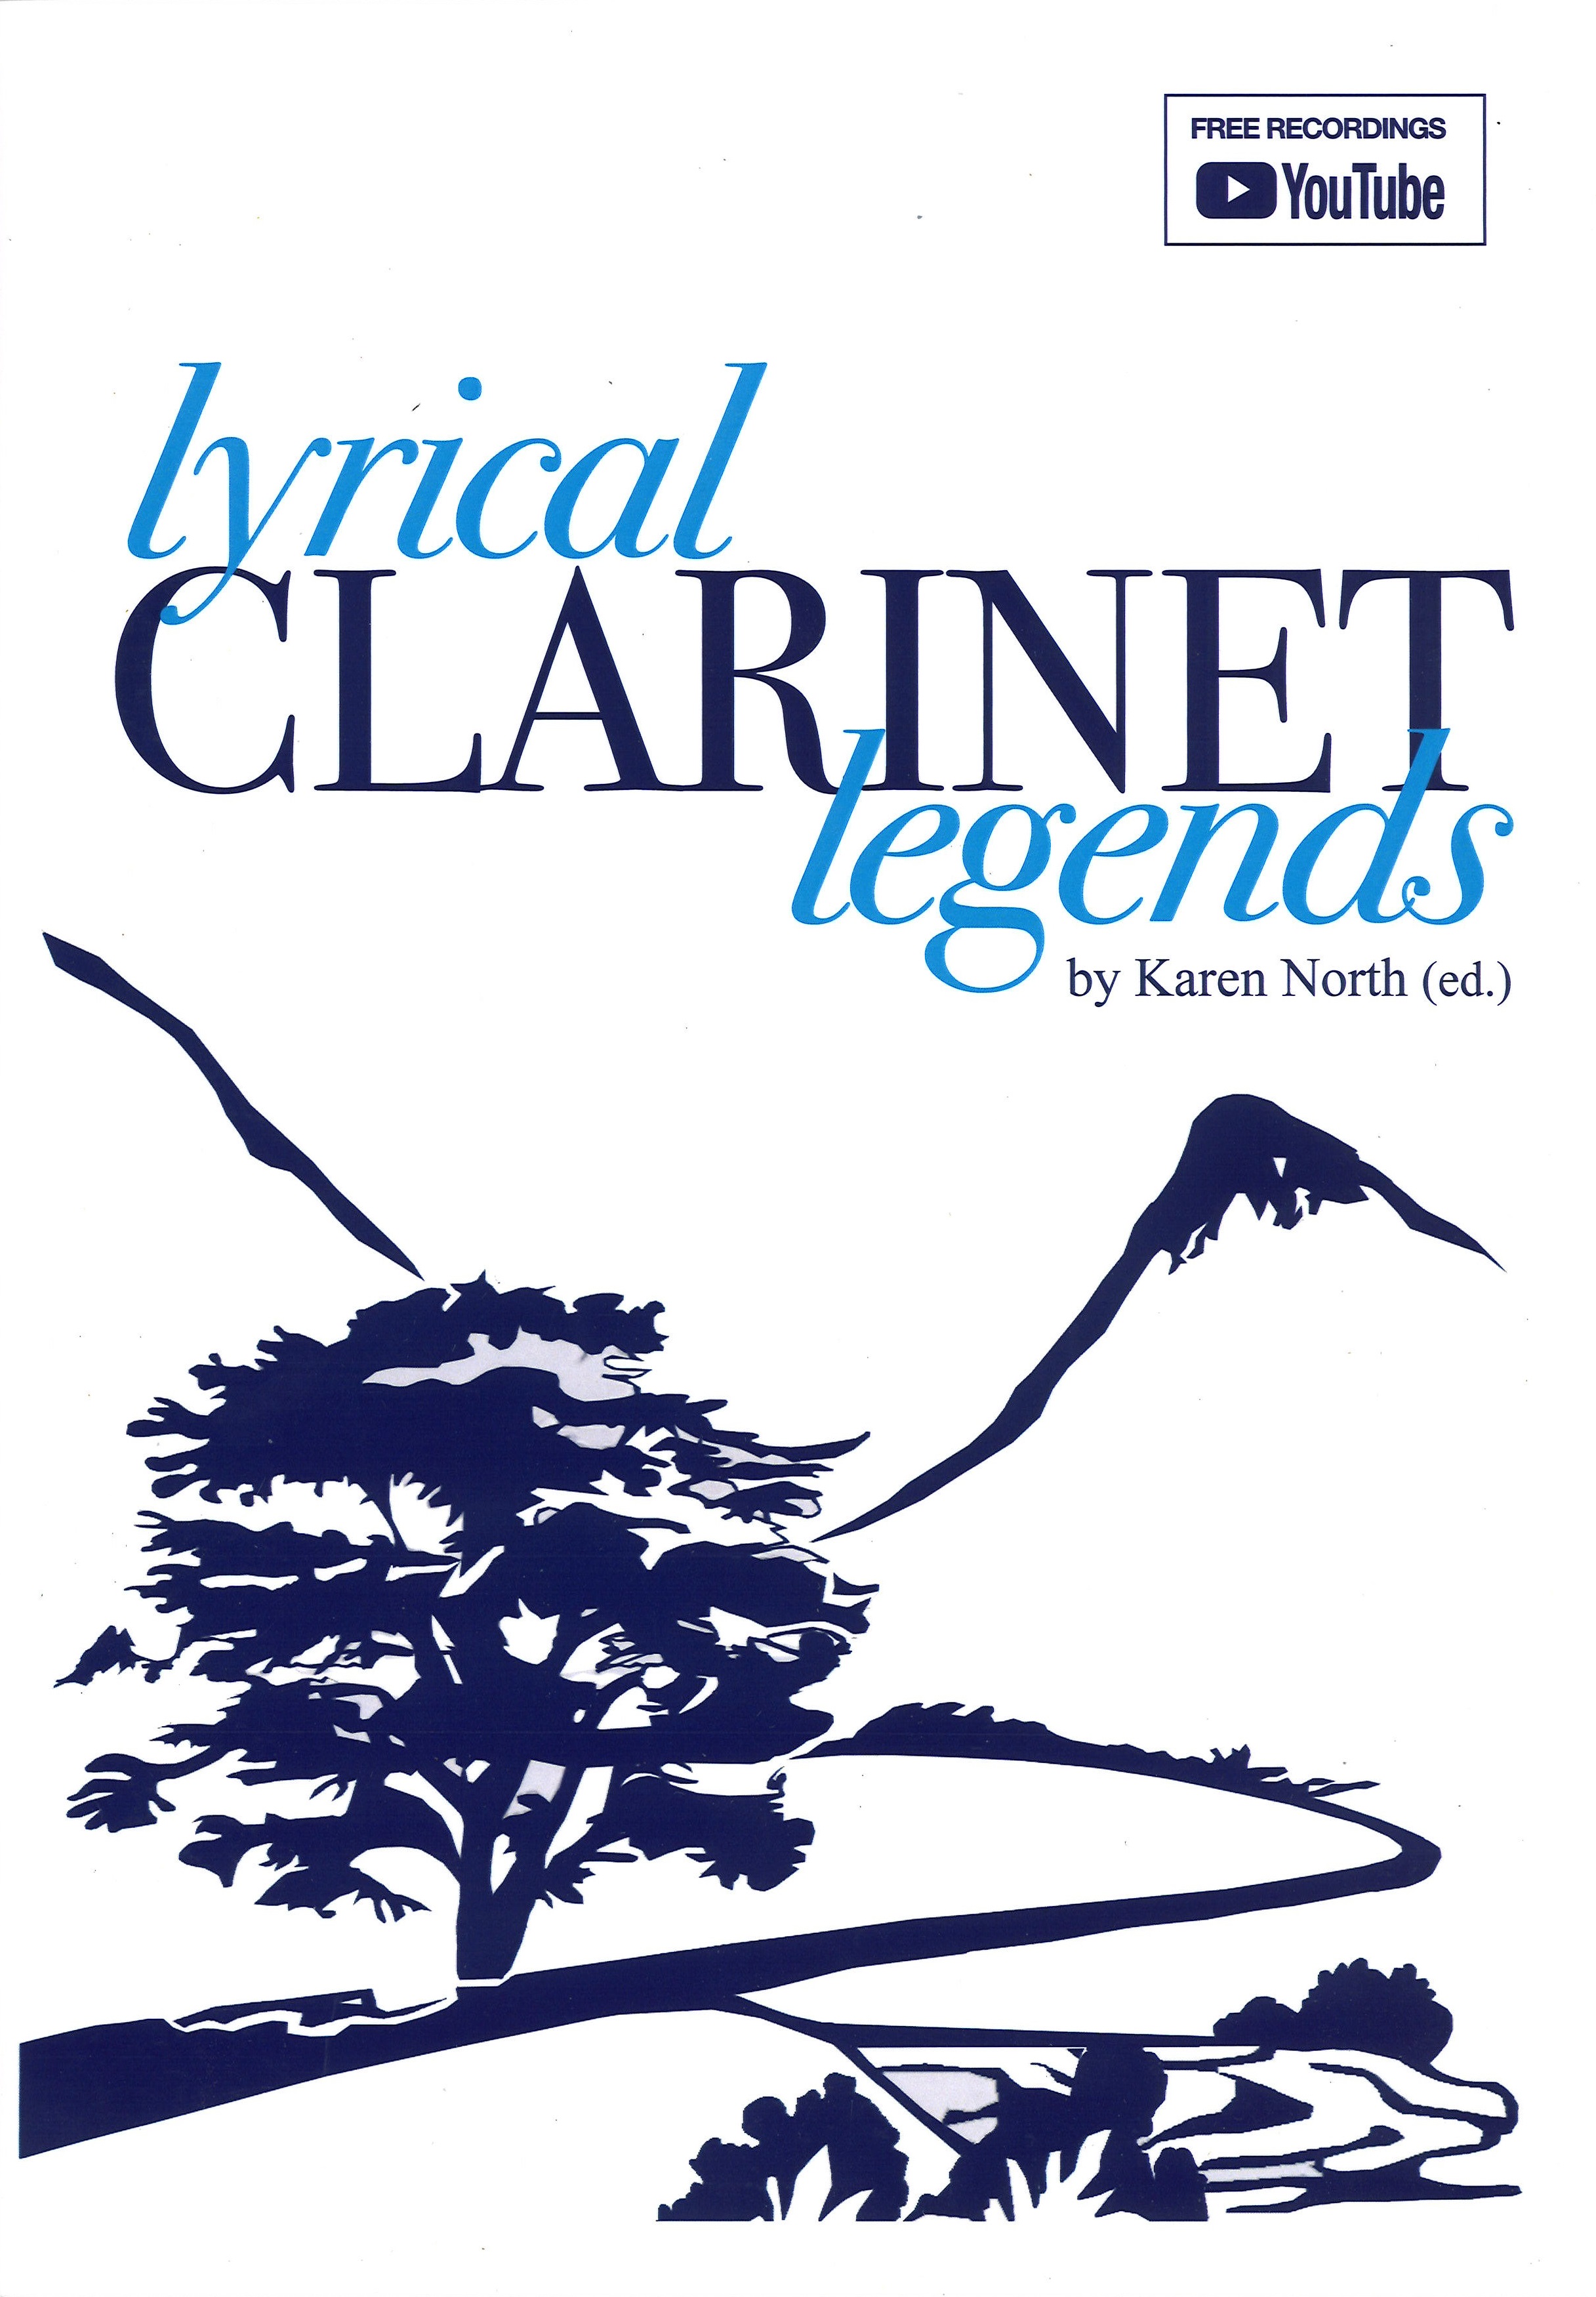 Lyrical Clarinet Legends North Clarinet & Piano Sheet Music Songbook